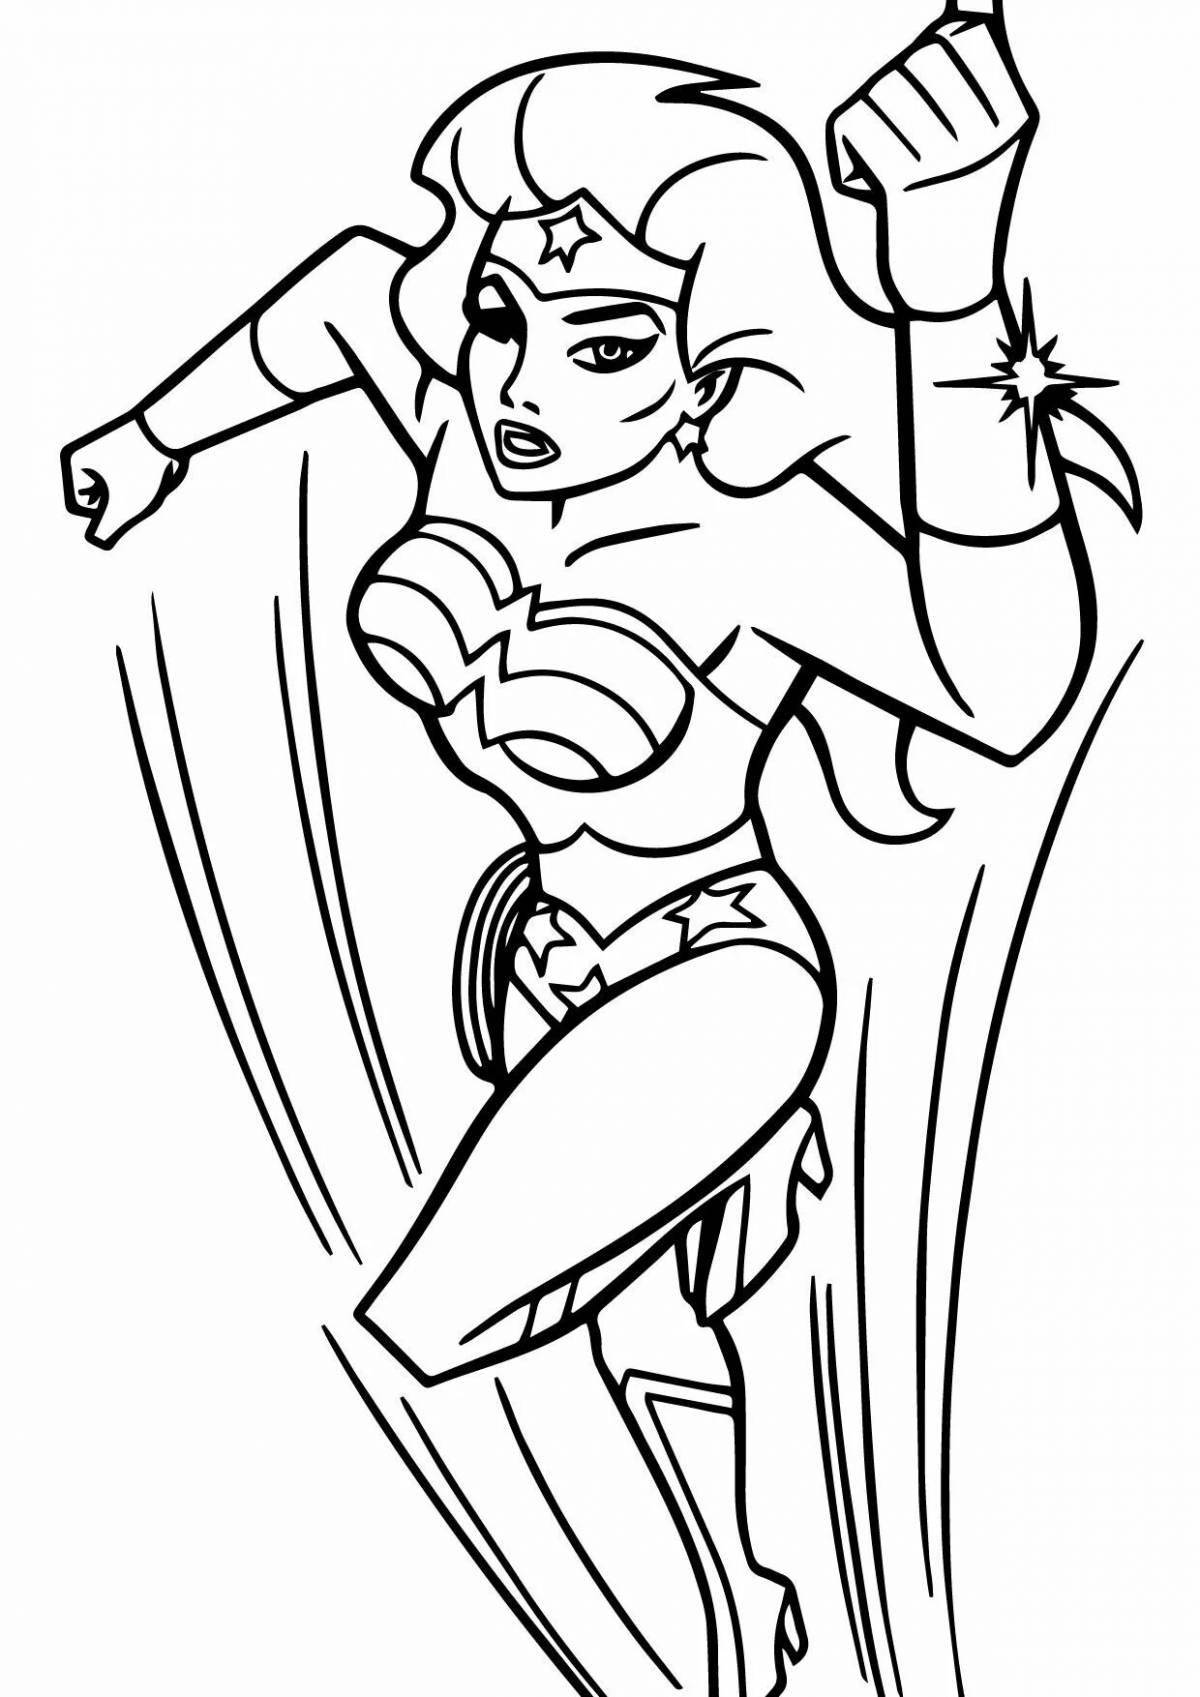 Coloring page elegant superwoman